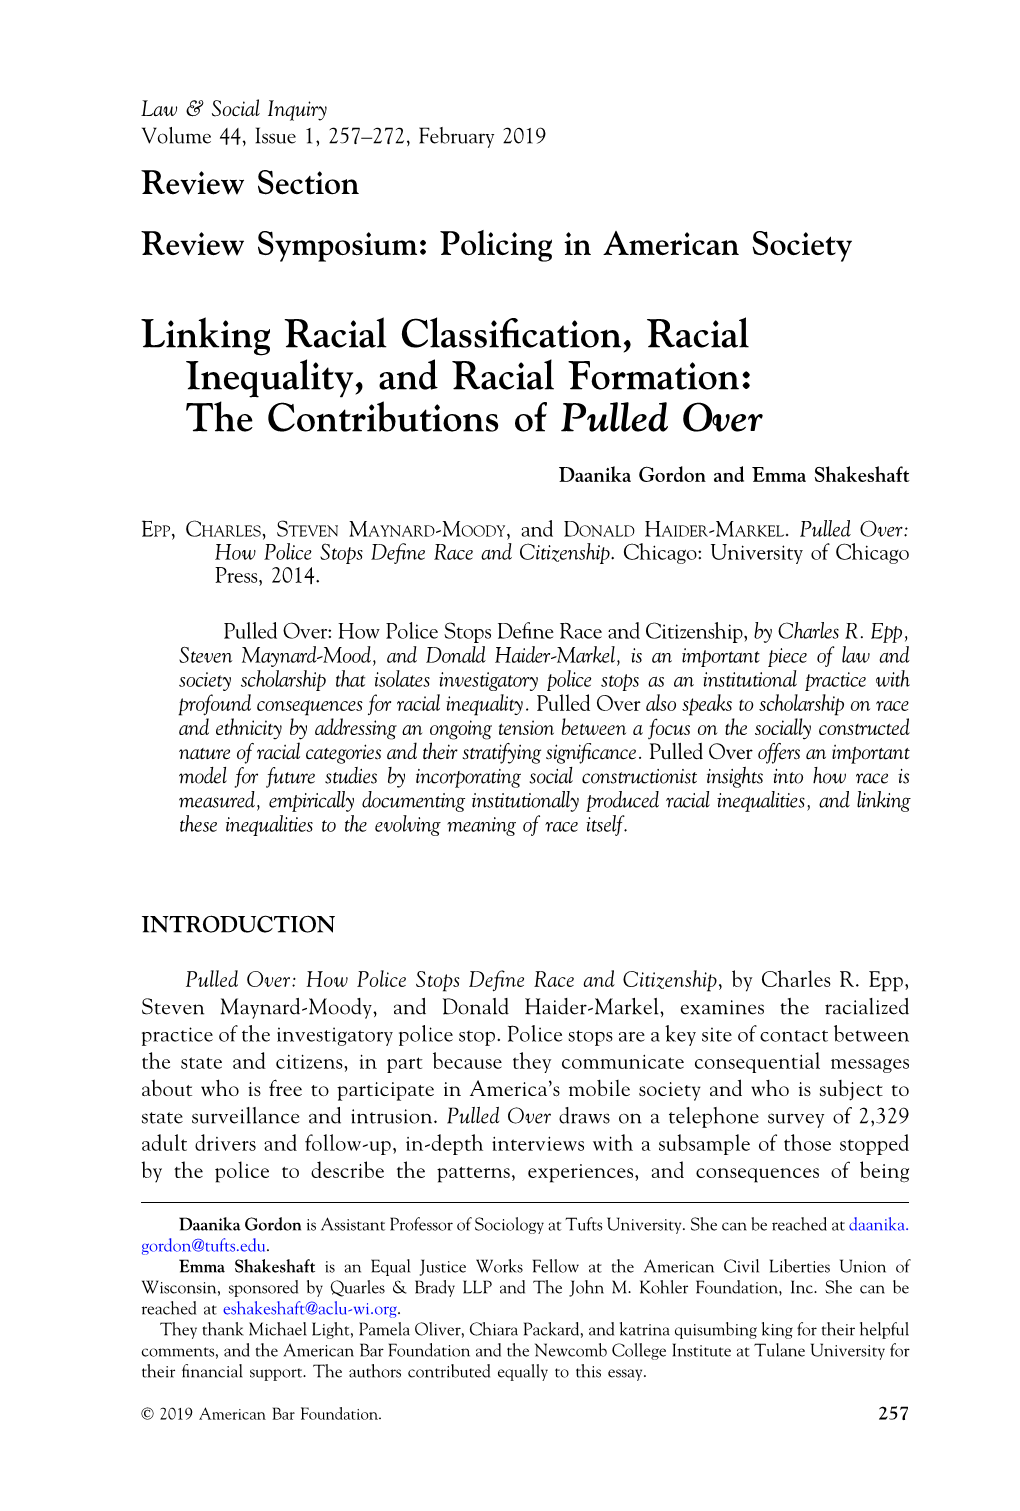 Linking Racial Classification, Racial